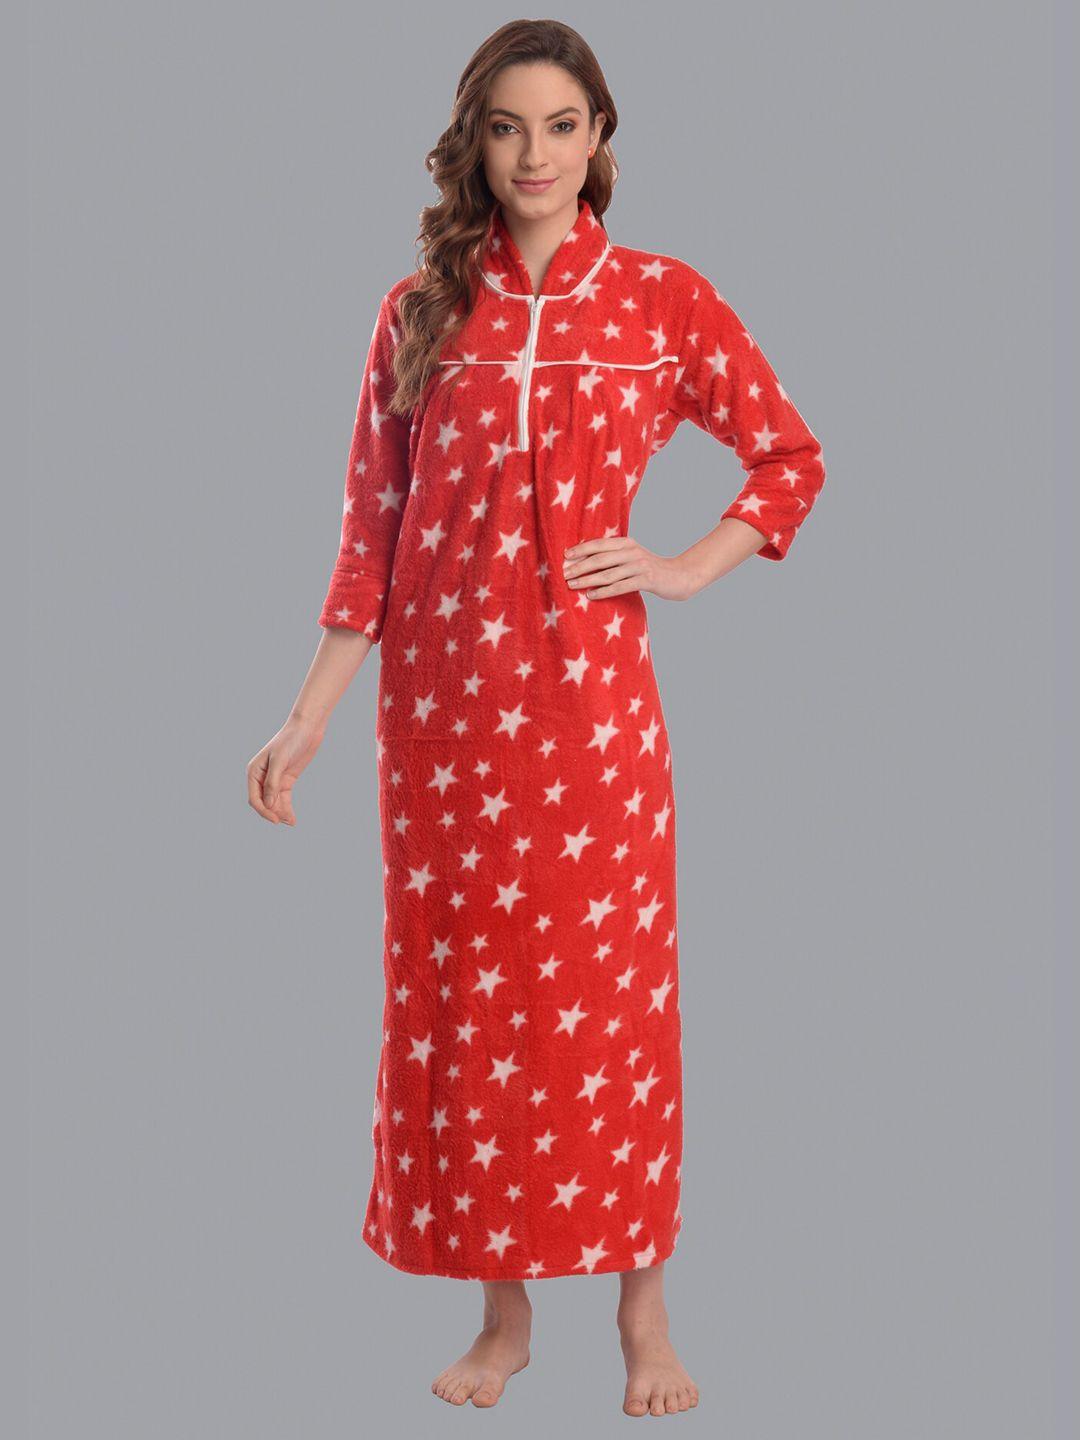 cierge-red-star-printed-winter-maxi-nightdress